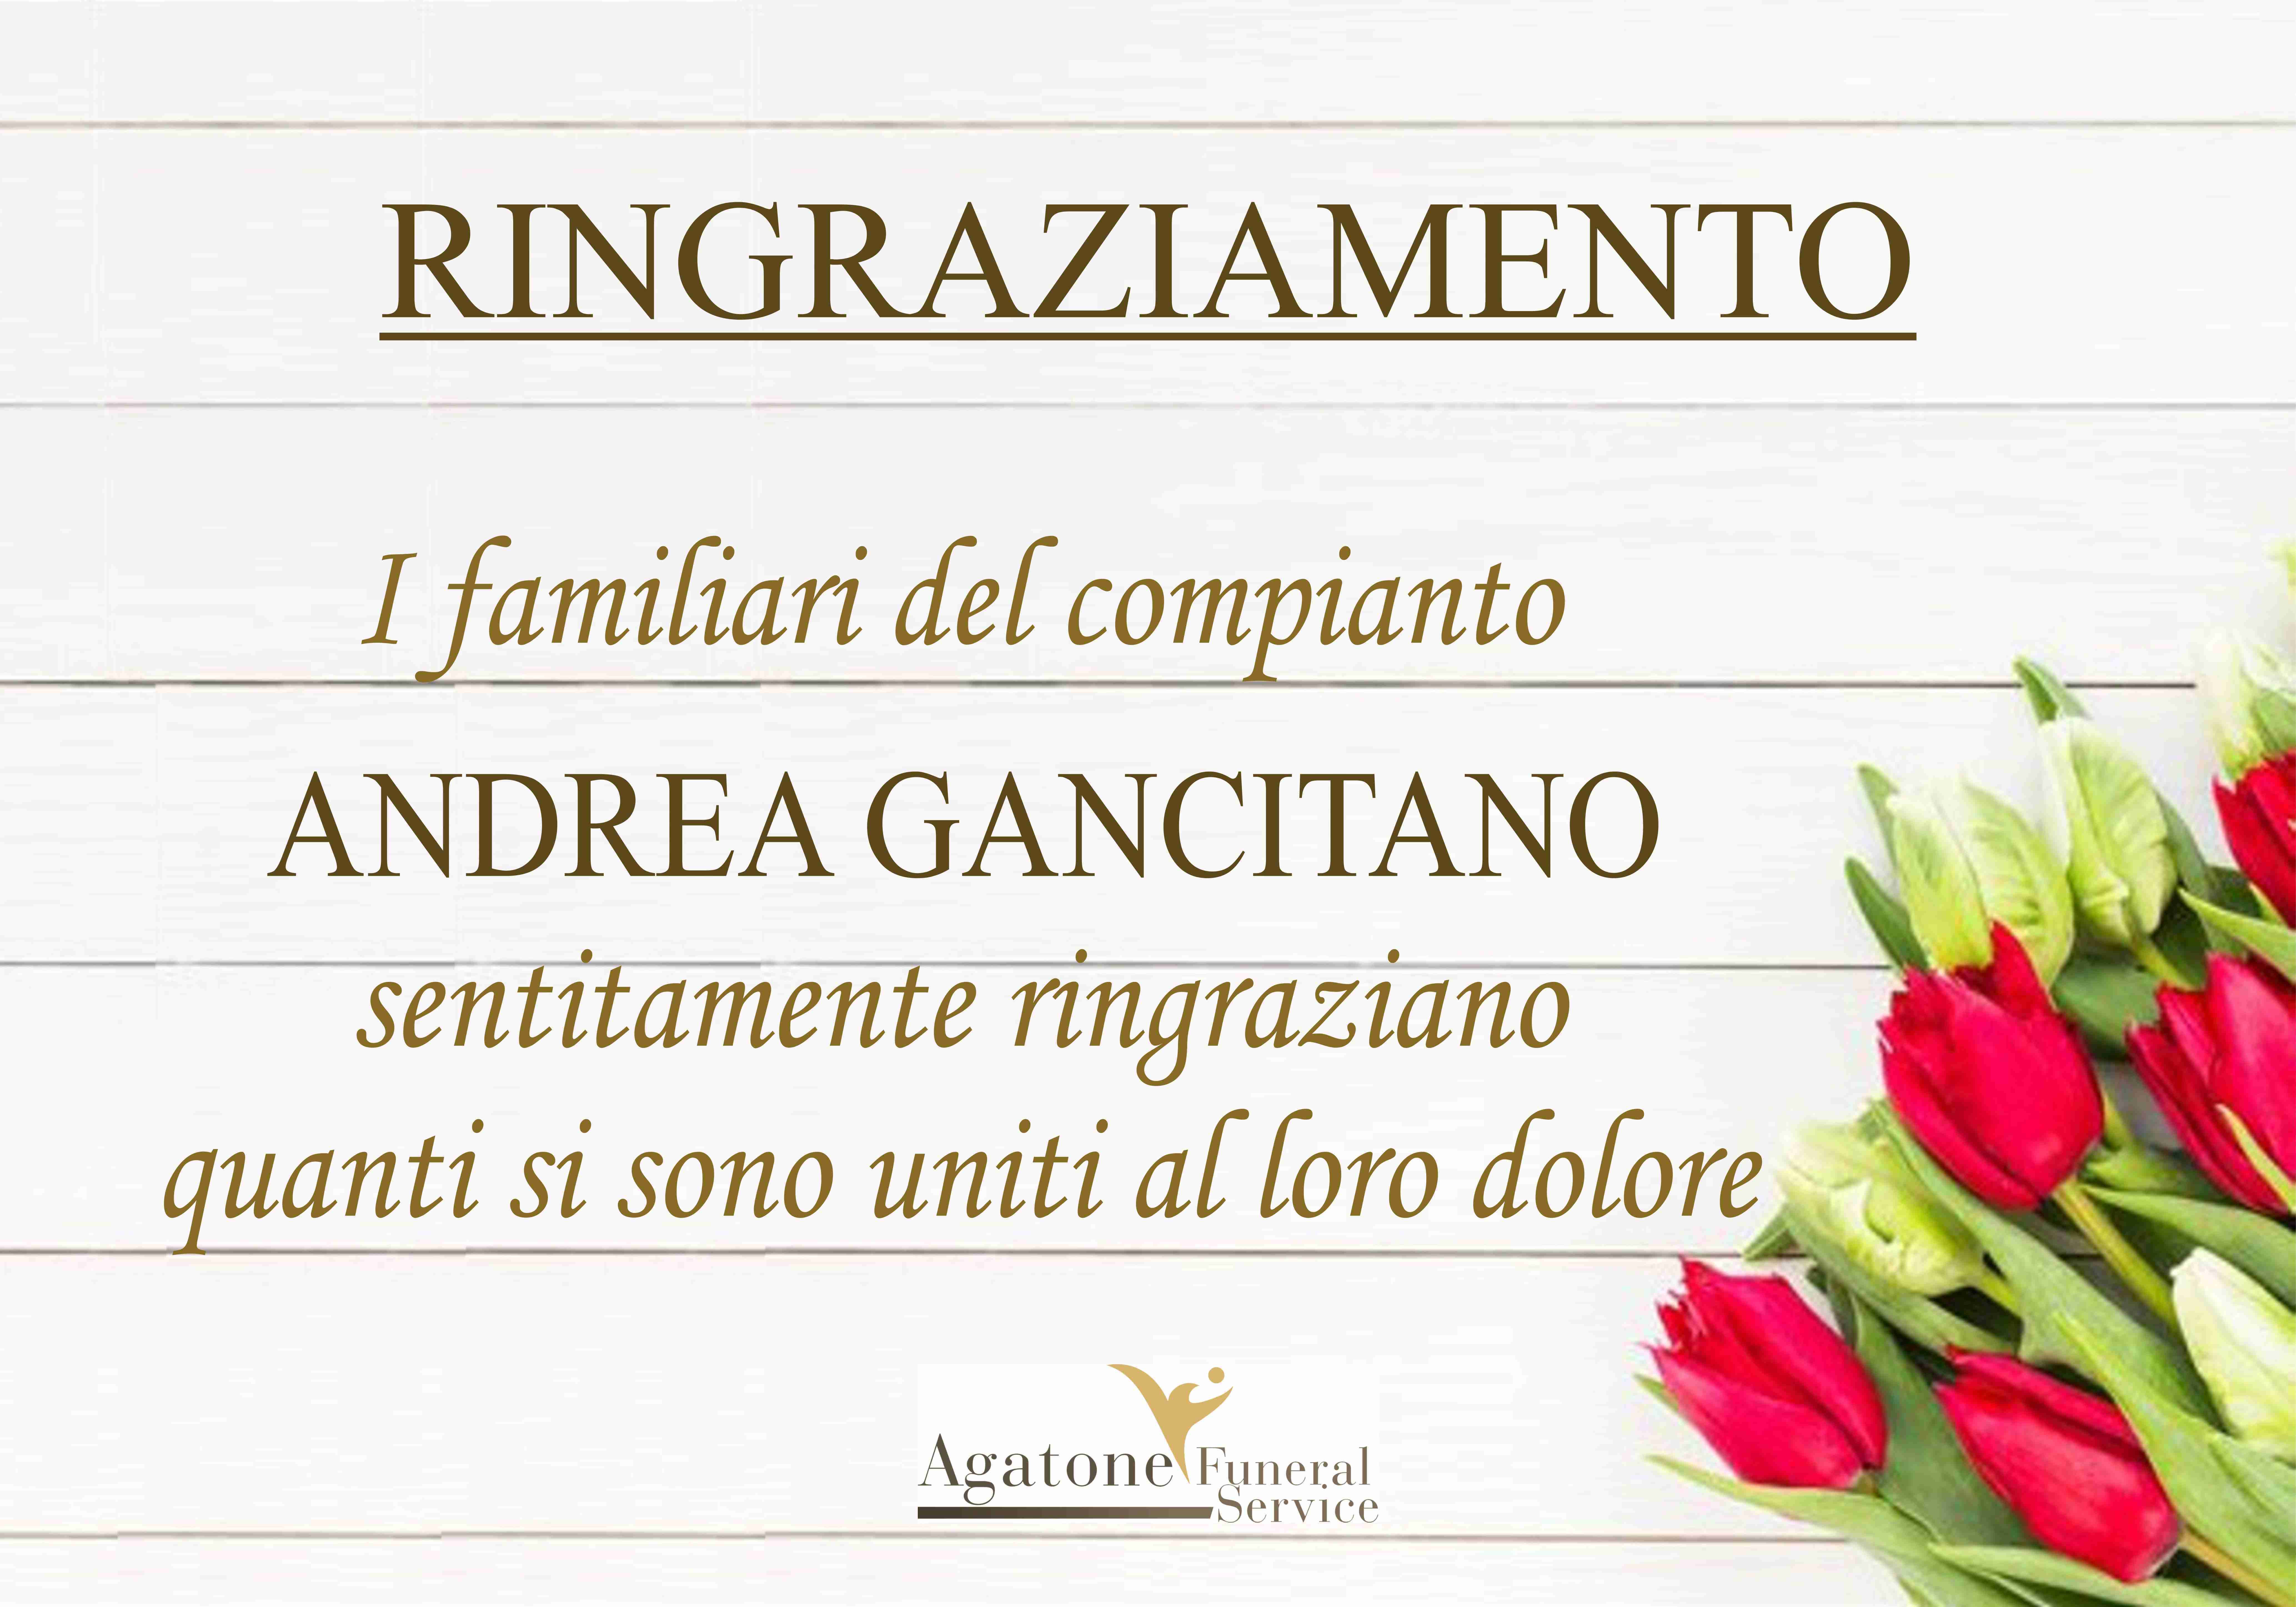 Andrea Gancitano